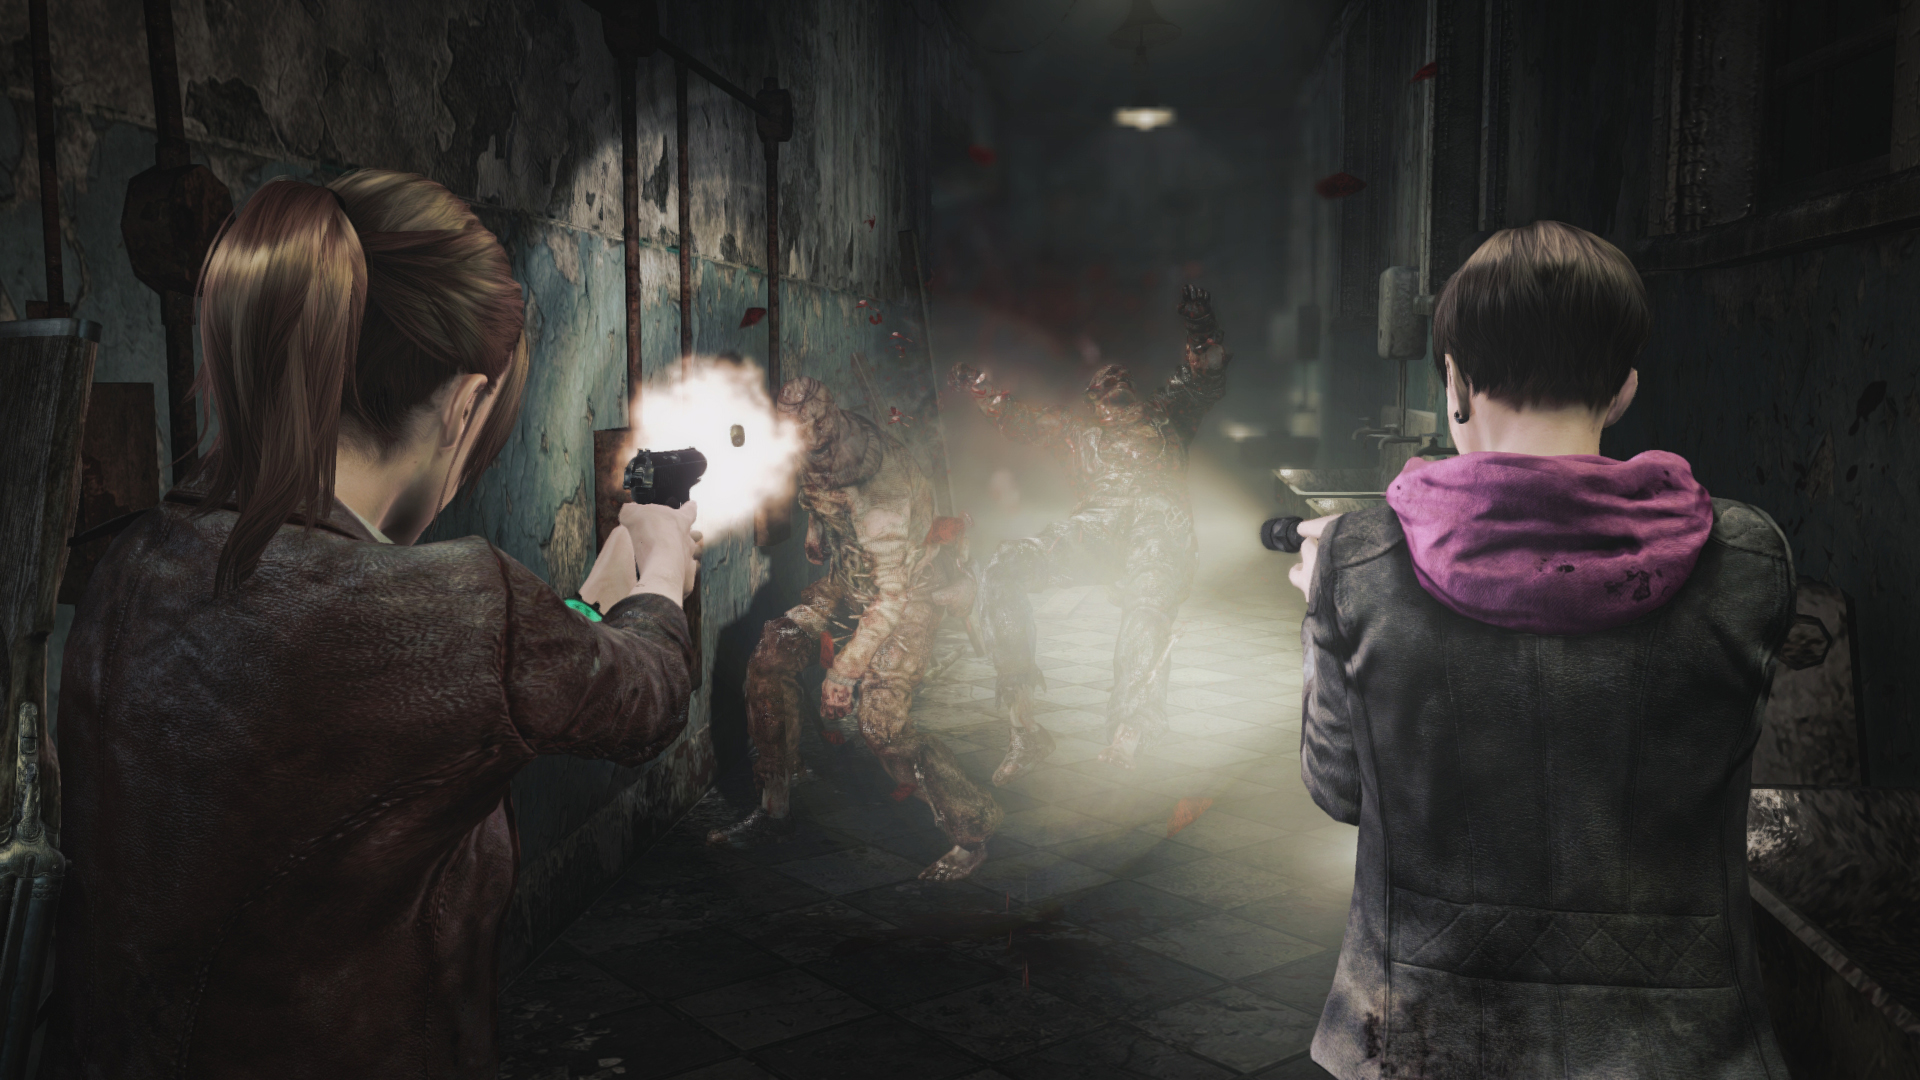 Jogo Resident Evil: Revelations 2 - Xbox One